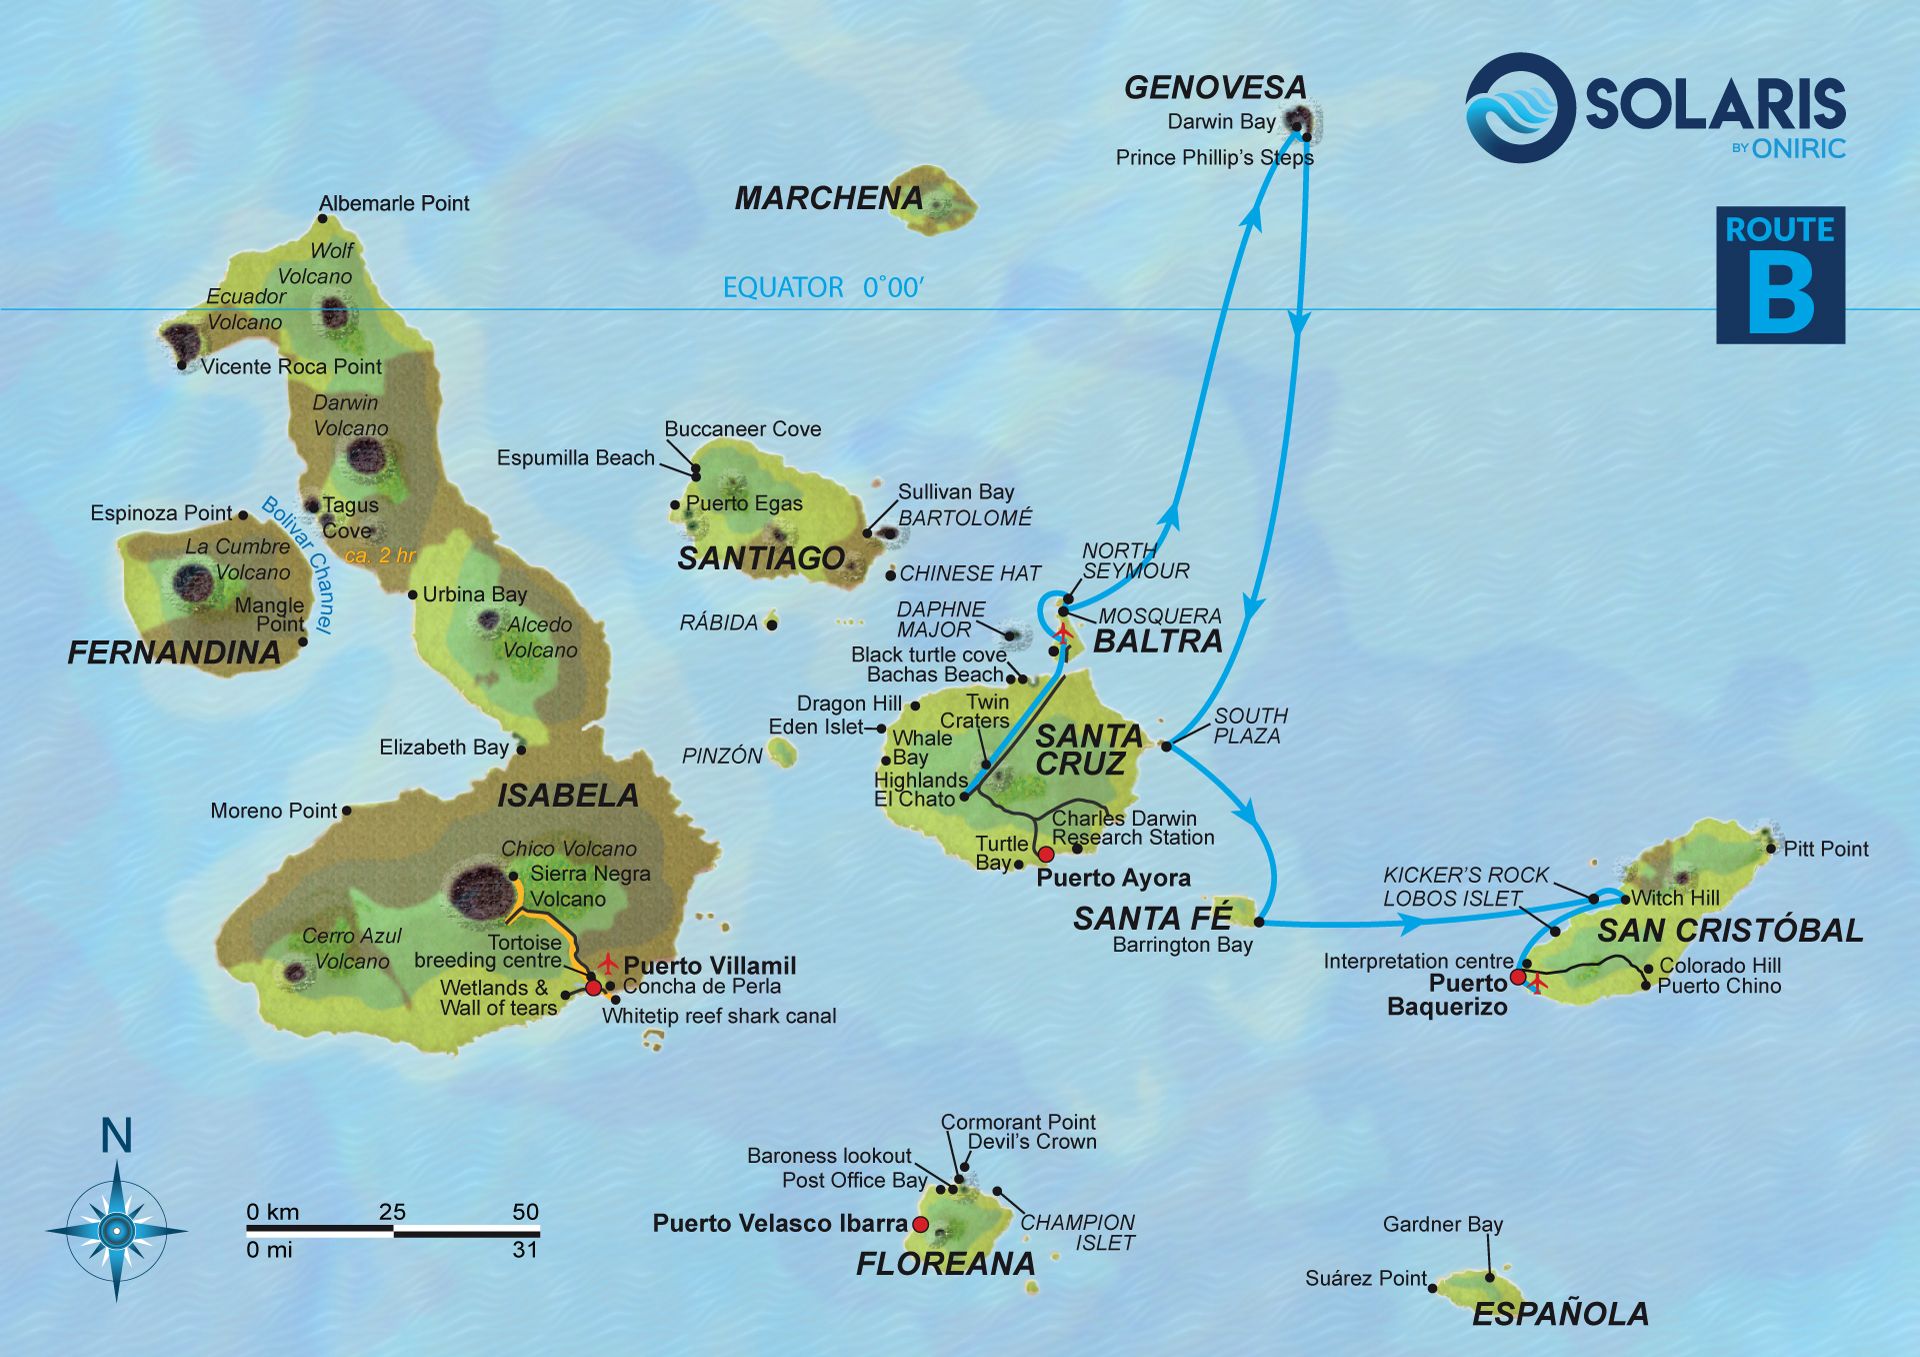 solaris-yacht-route-b-Galapagos-Ecuador-Oniric-Safe-travels